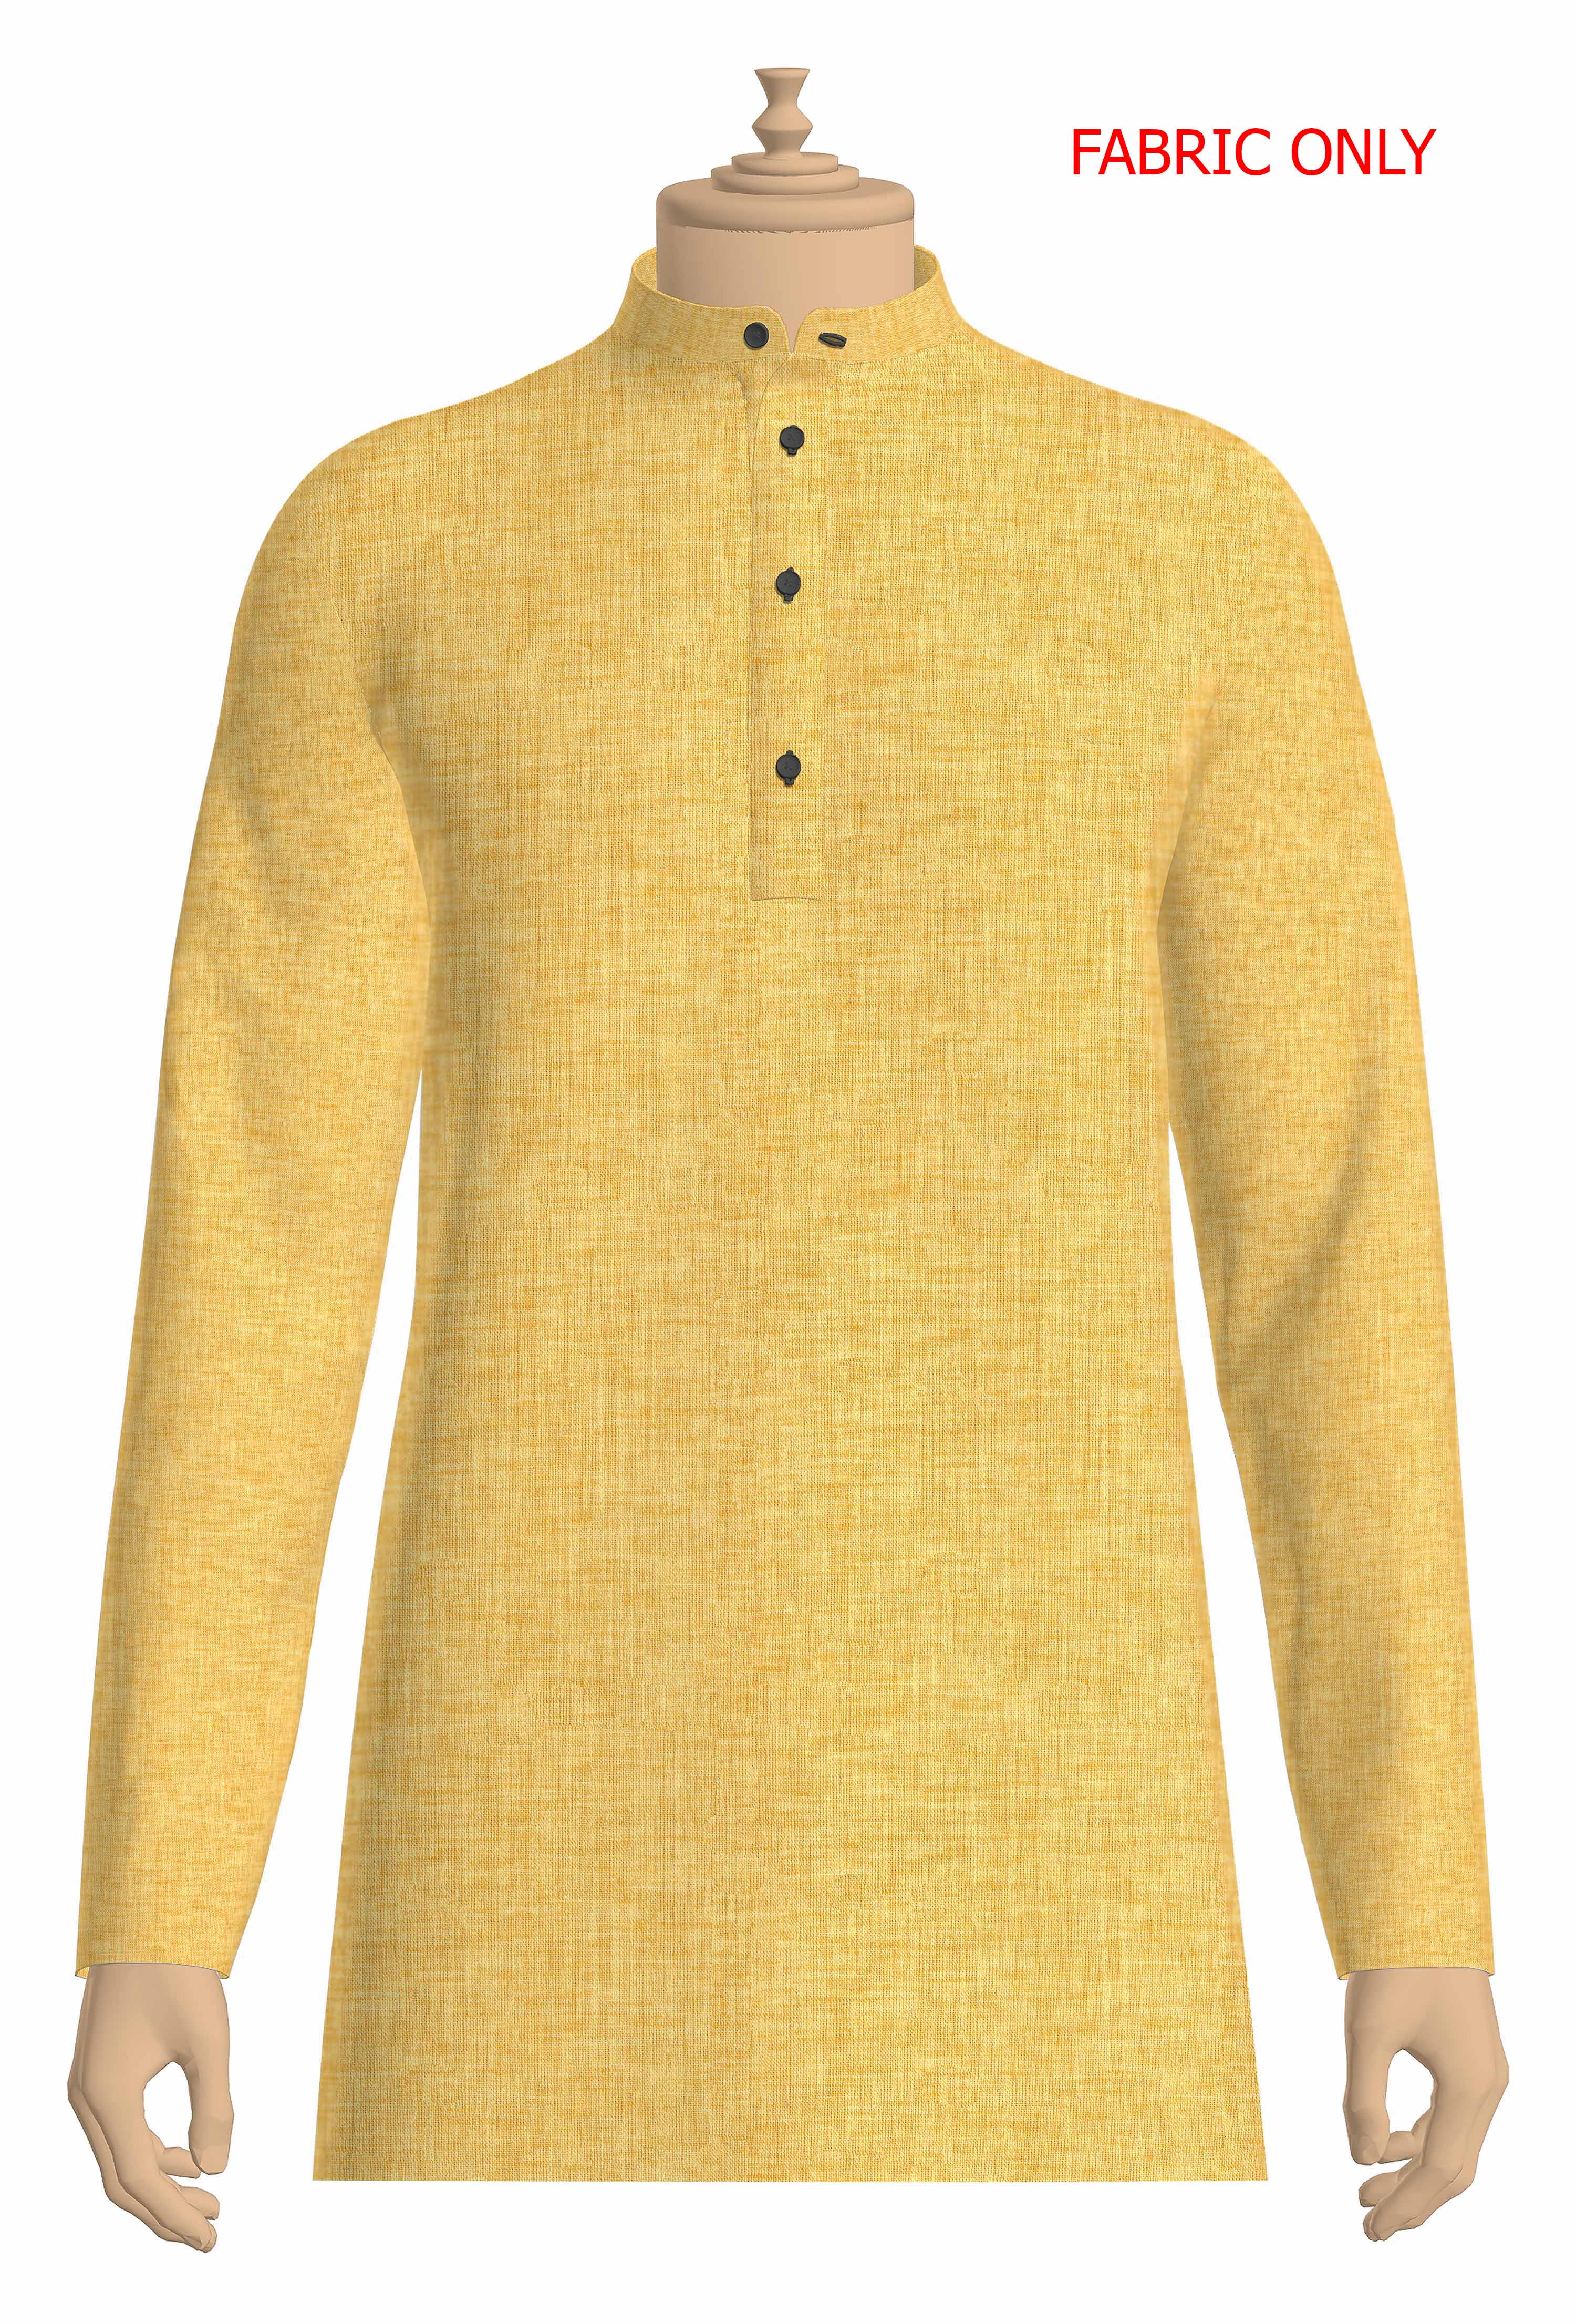 Cotton Blend Mustard Yellow Colour Kurtha Fabric Lampus - CAPC1160-34